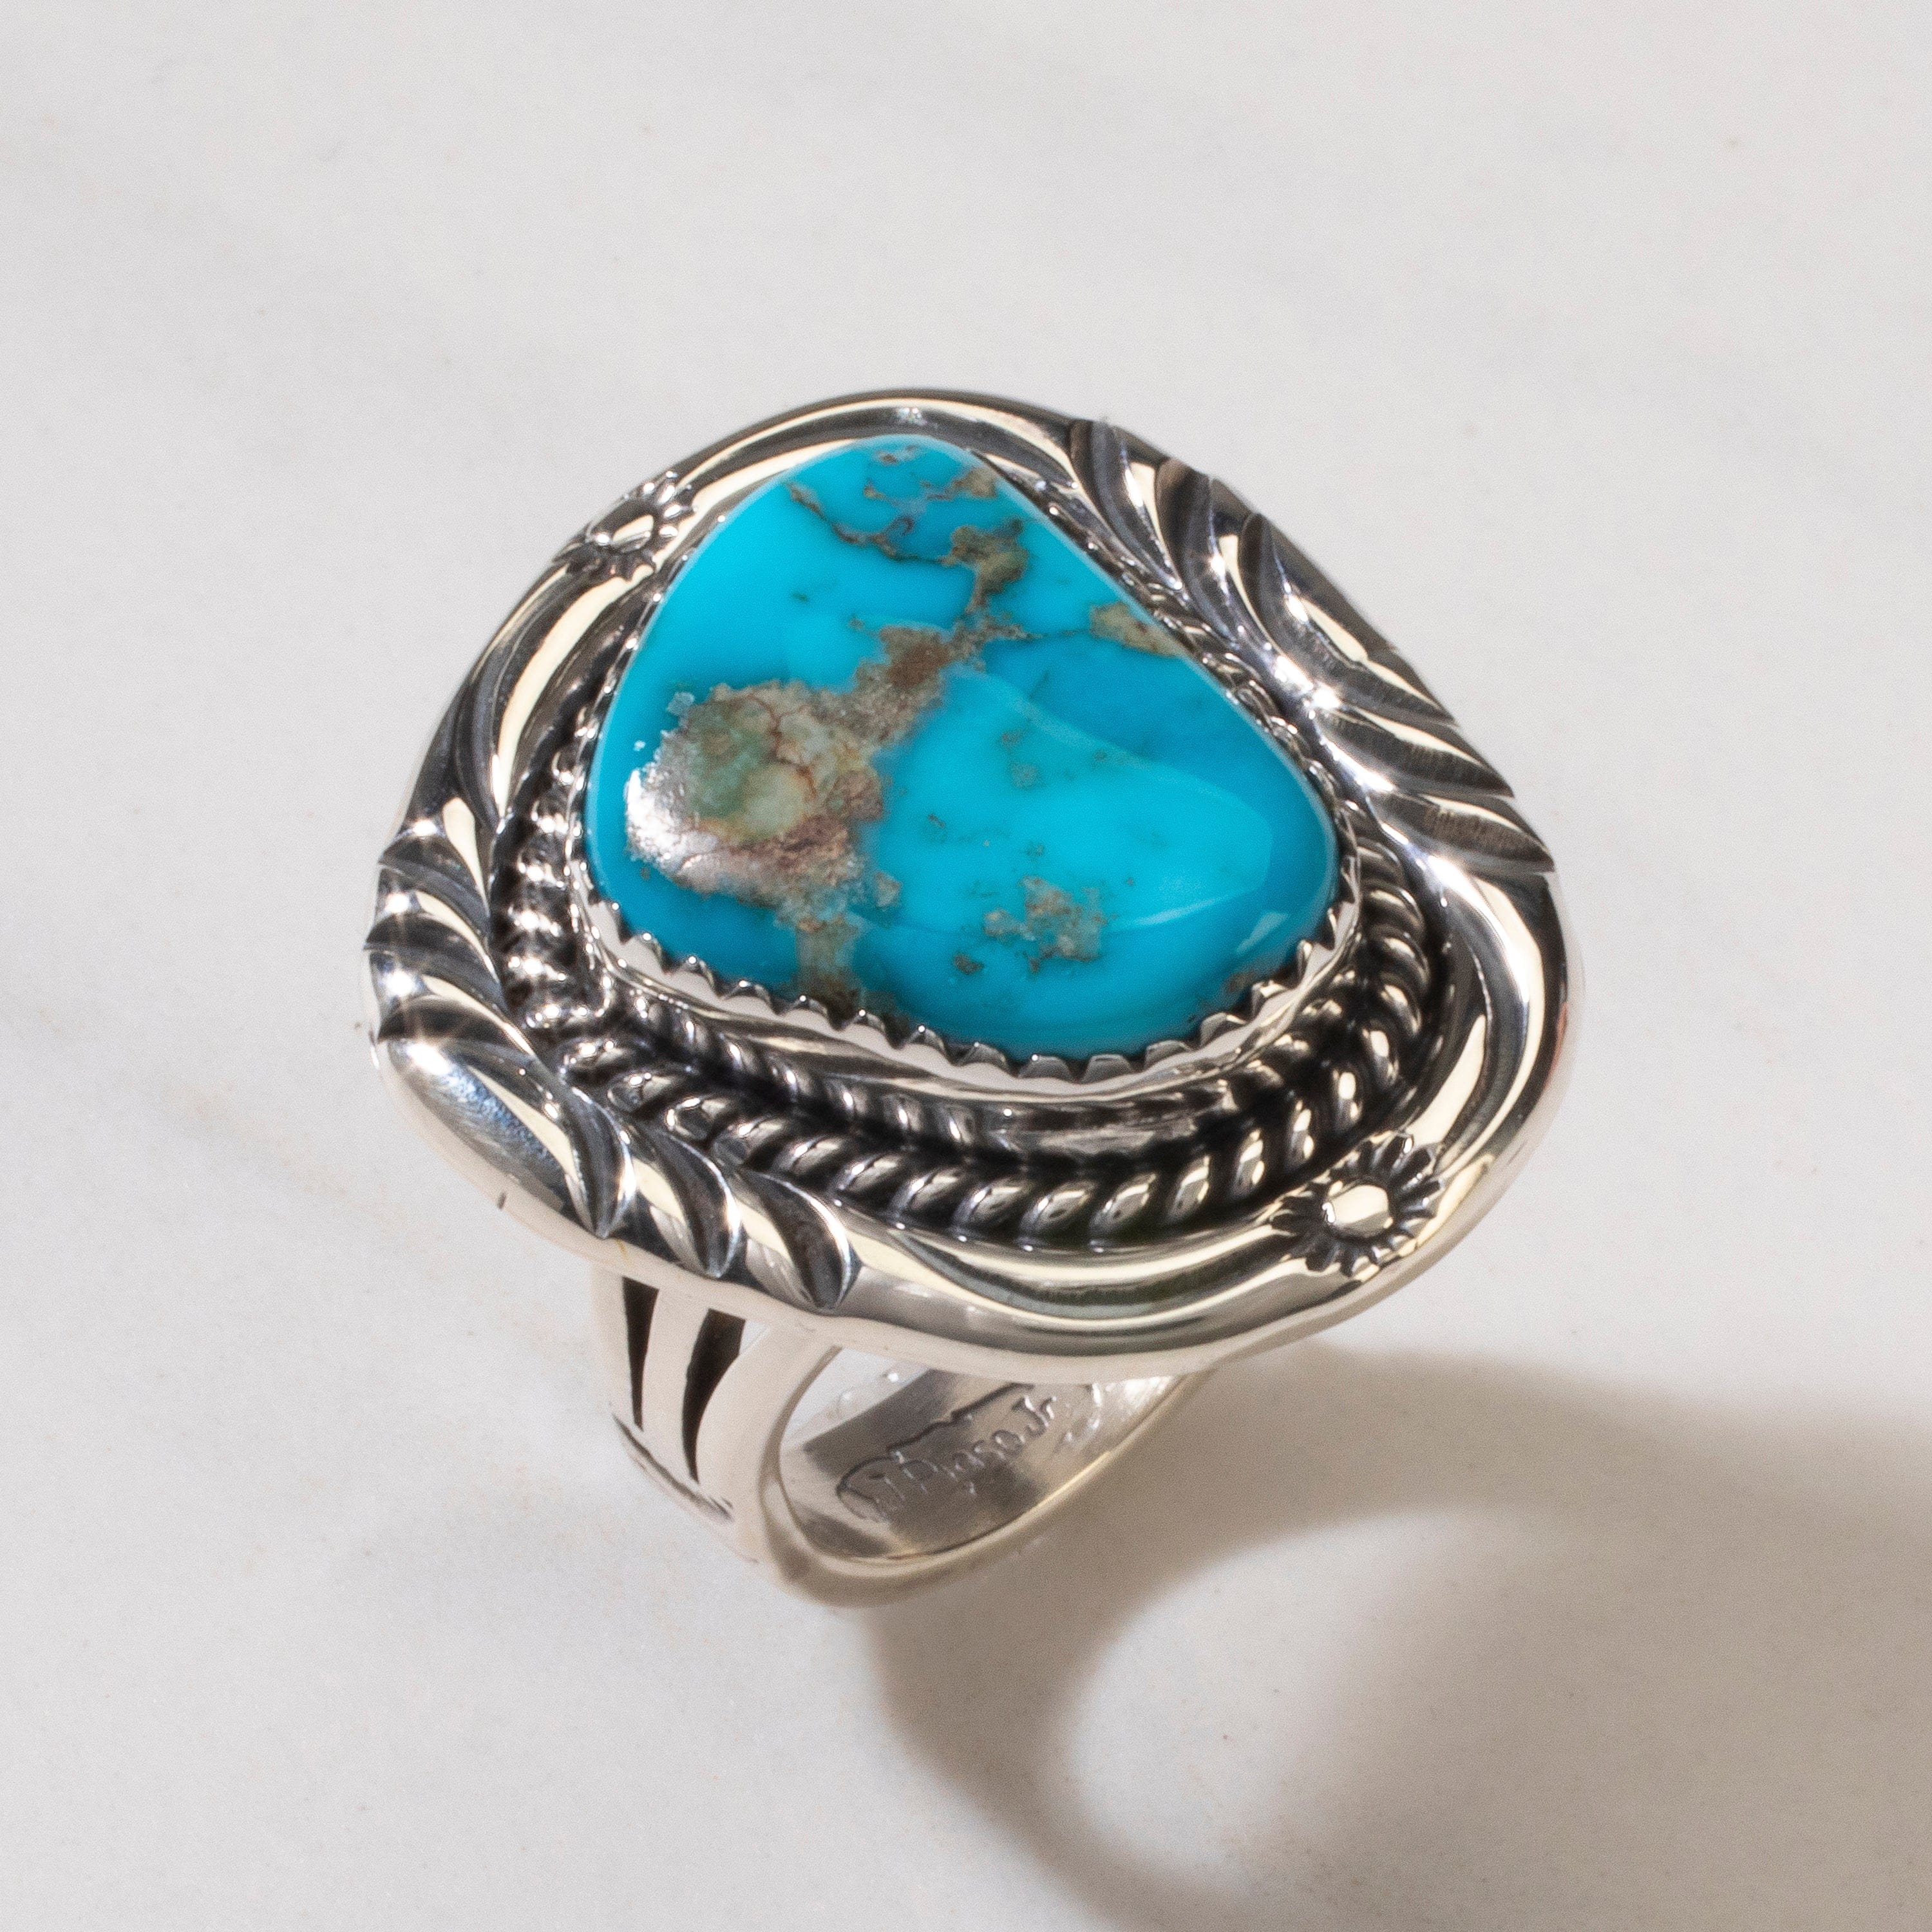 Kalifano Native American Jewelry 6 Joe Piaso Jr. Sleeping Beauty Turquoise Navajo USA Native American Made 925 Sterling Silver Ring NAR700.036.6